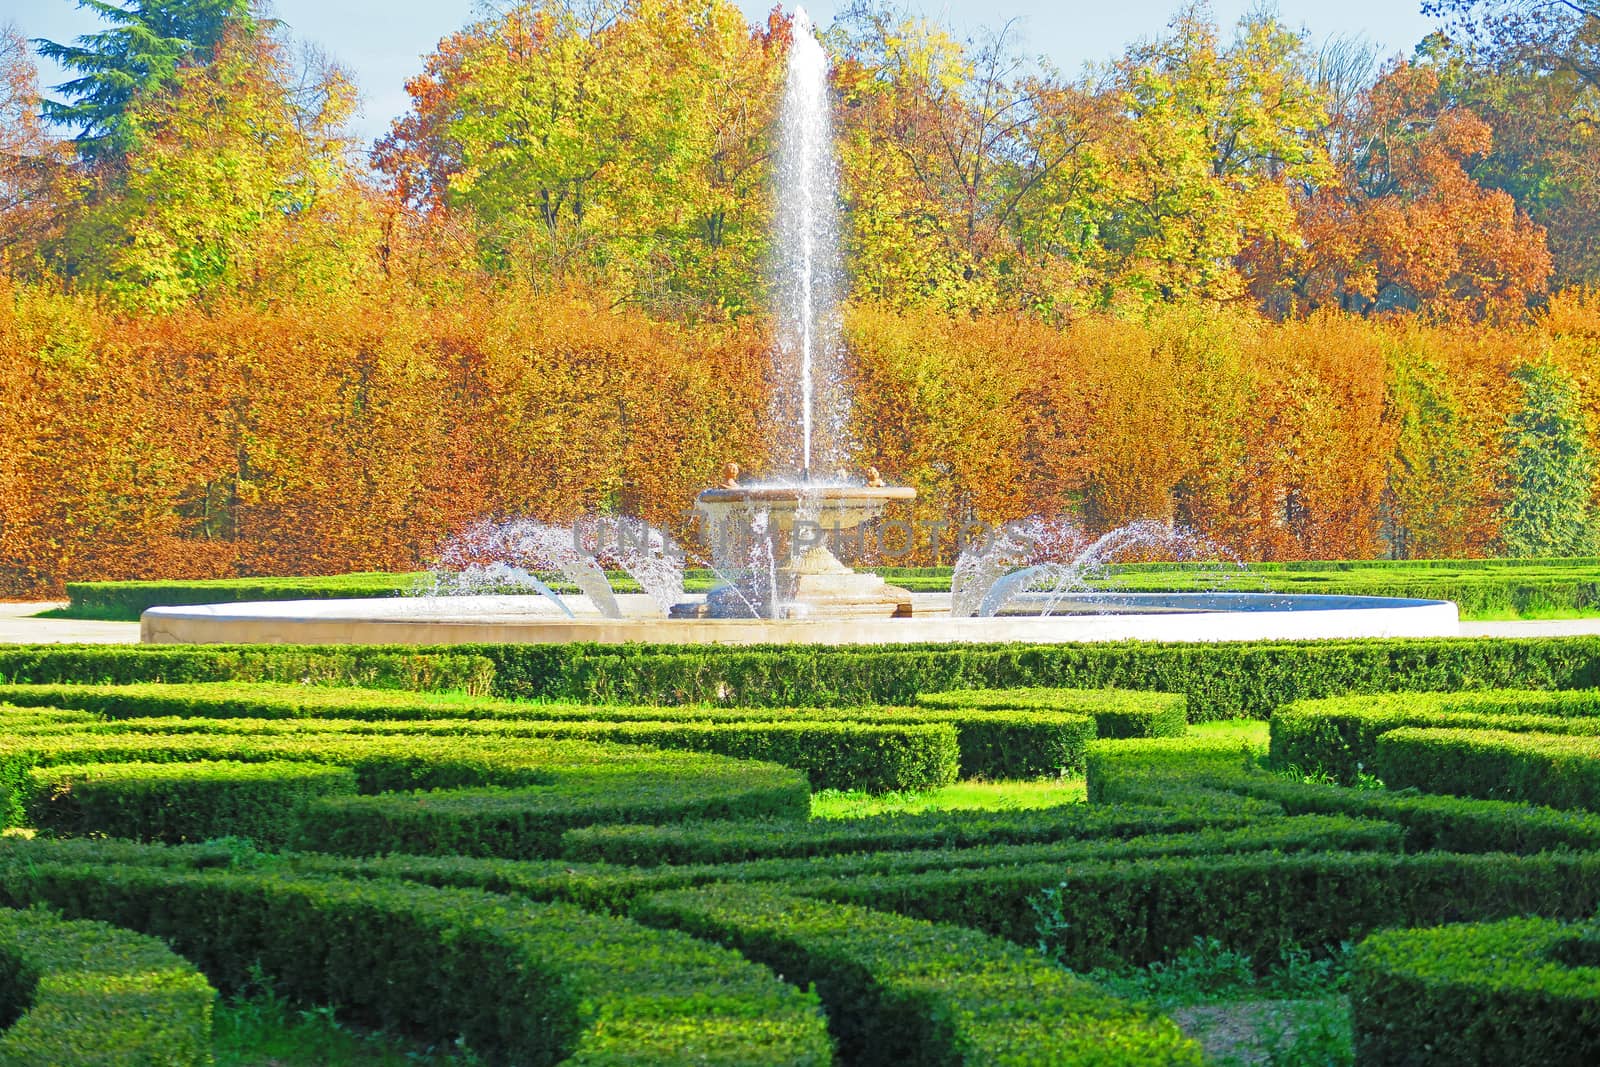 Fountain in the autumn park by dav76